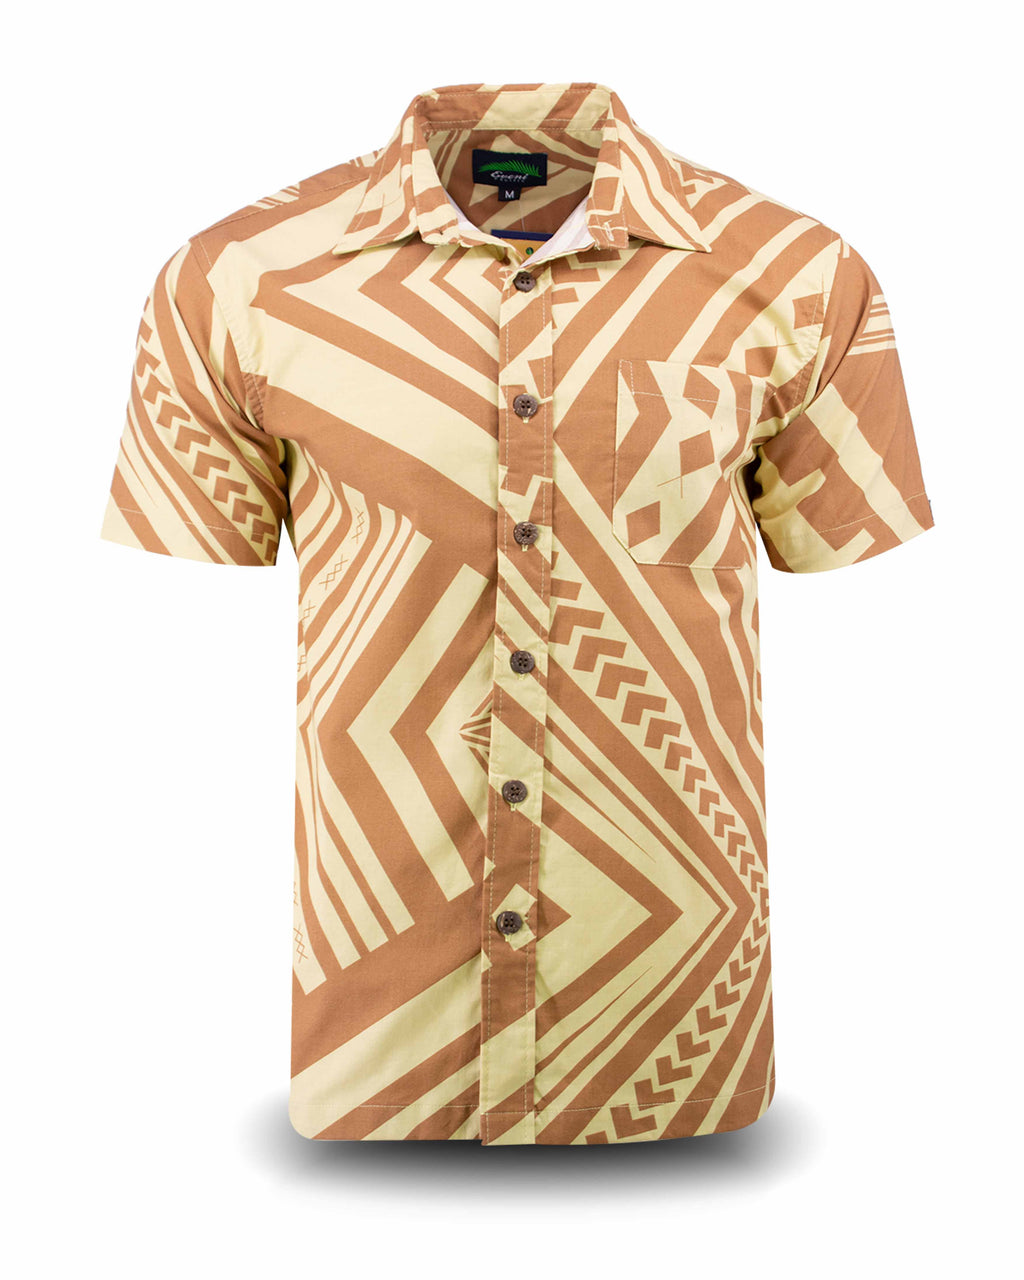 Eveni Pacific Men's Classic Shirt - Aloe Brown